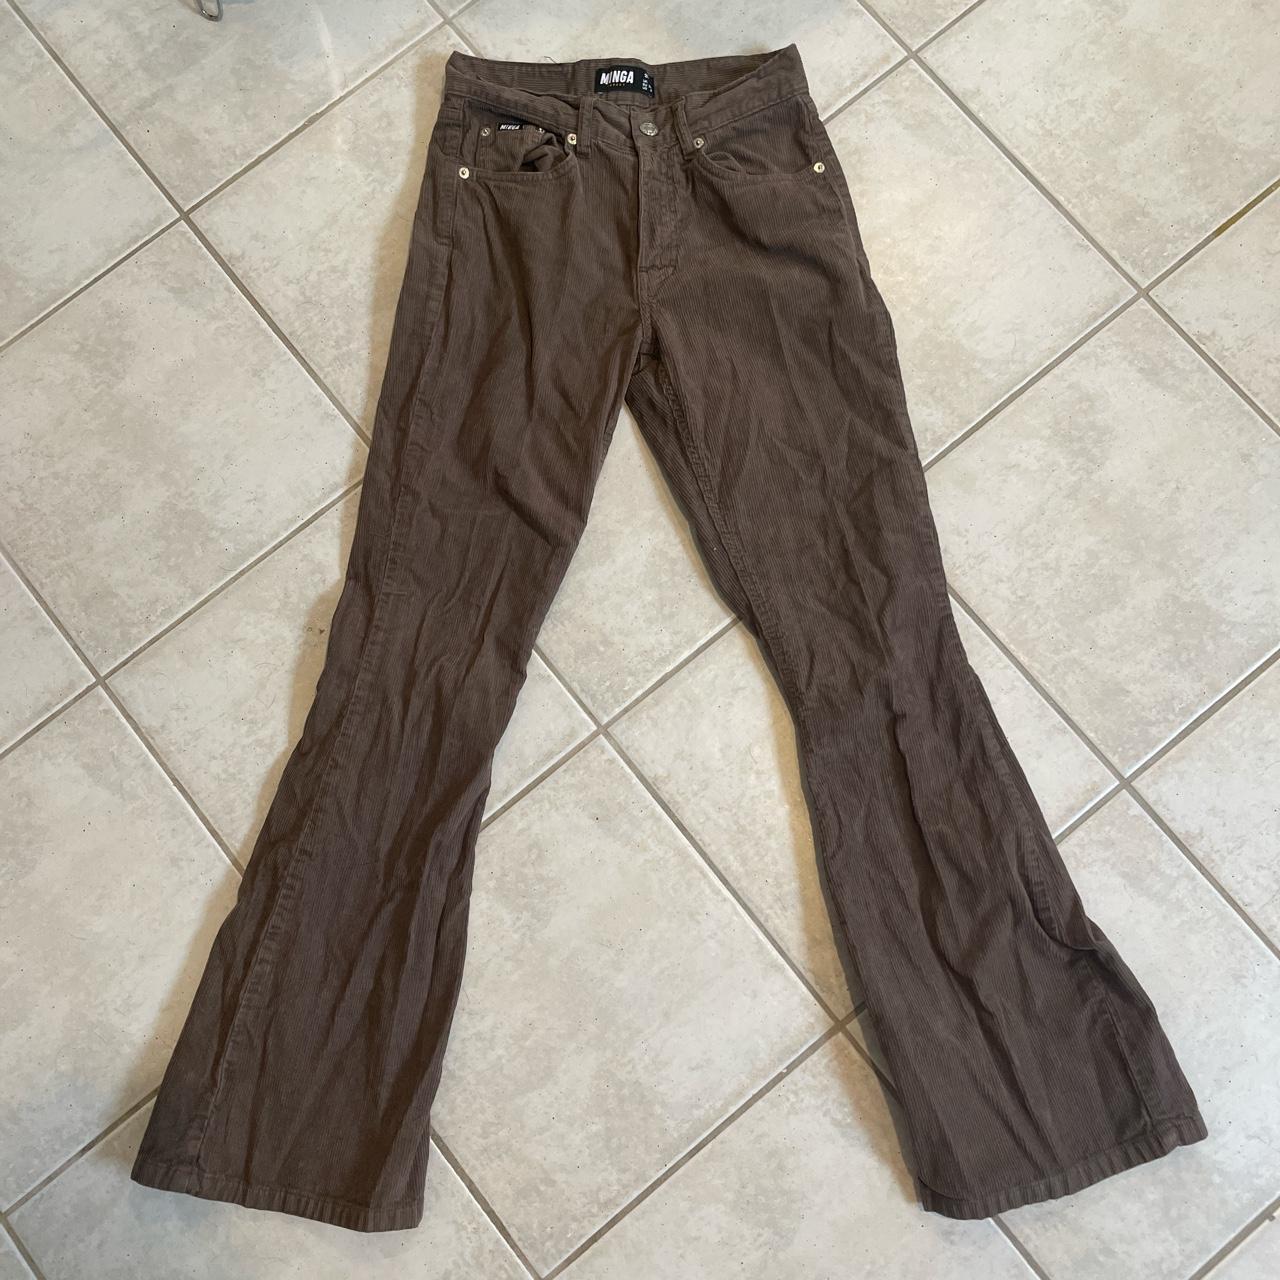 Corduroy brown flare pants Waist: 13 inches flat - Depop